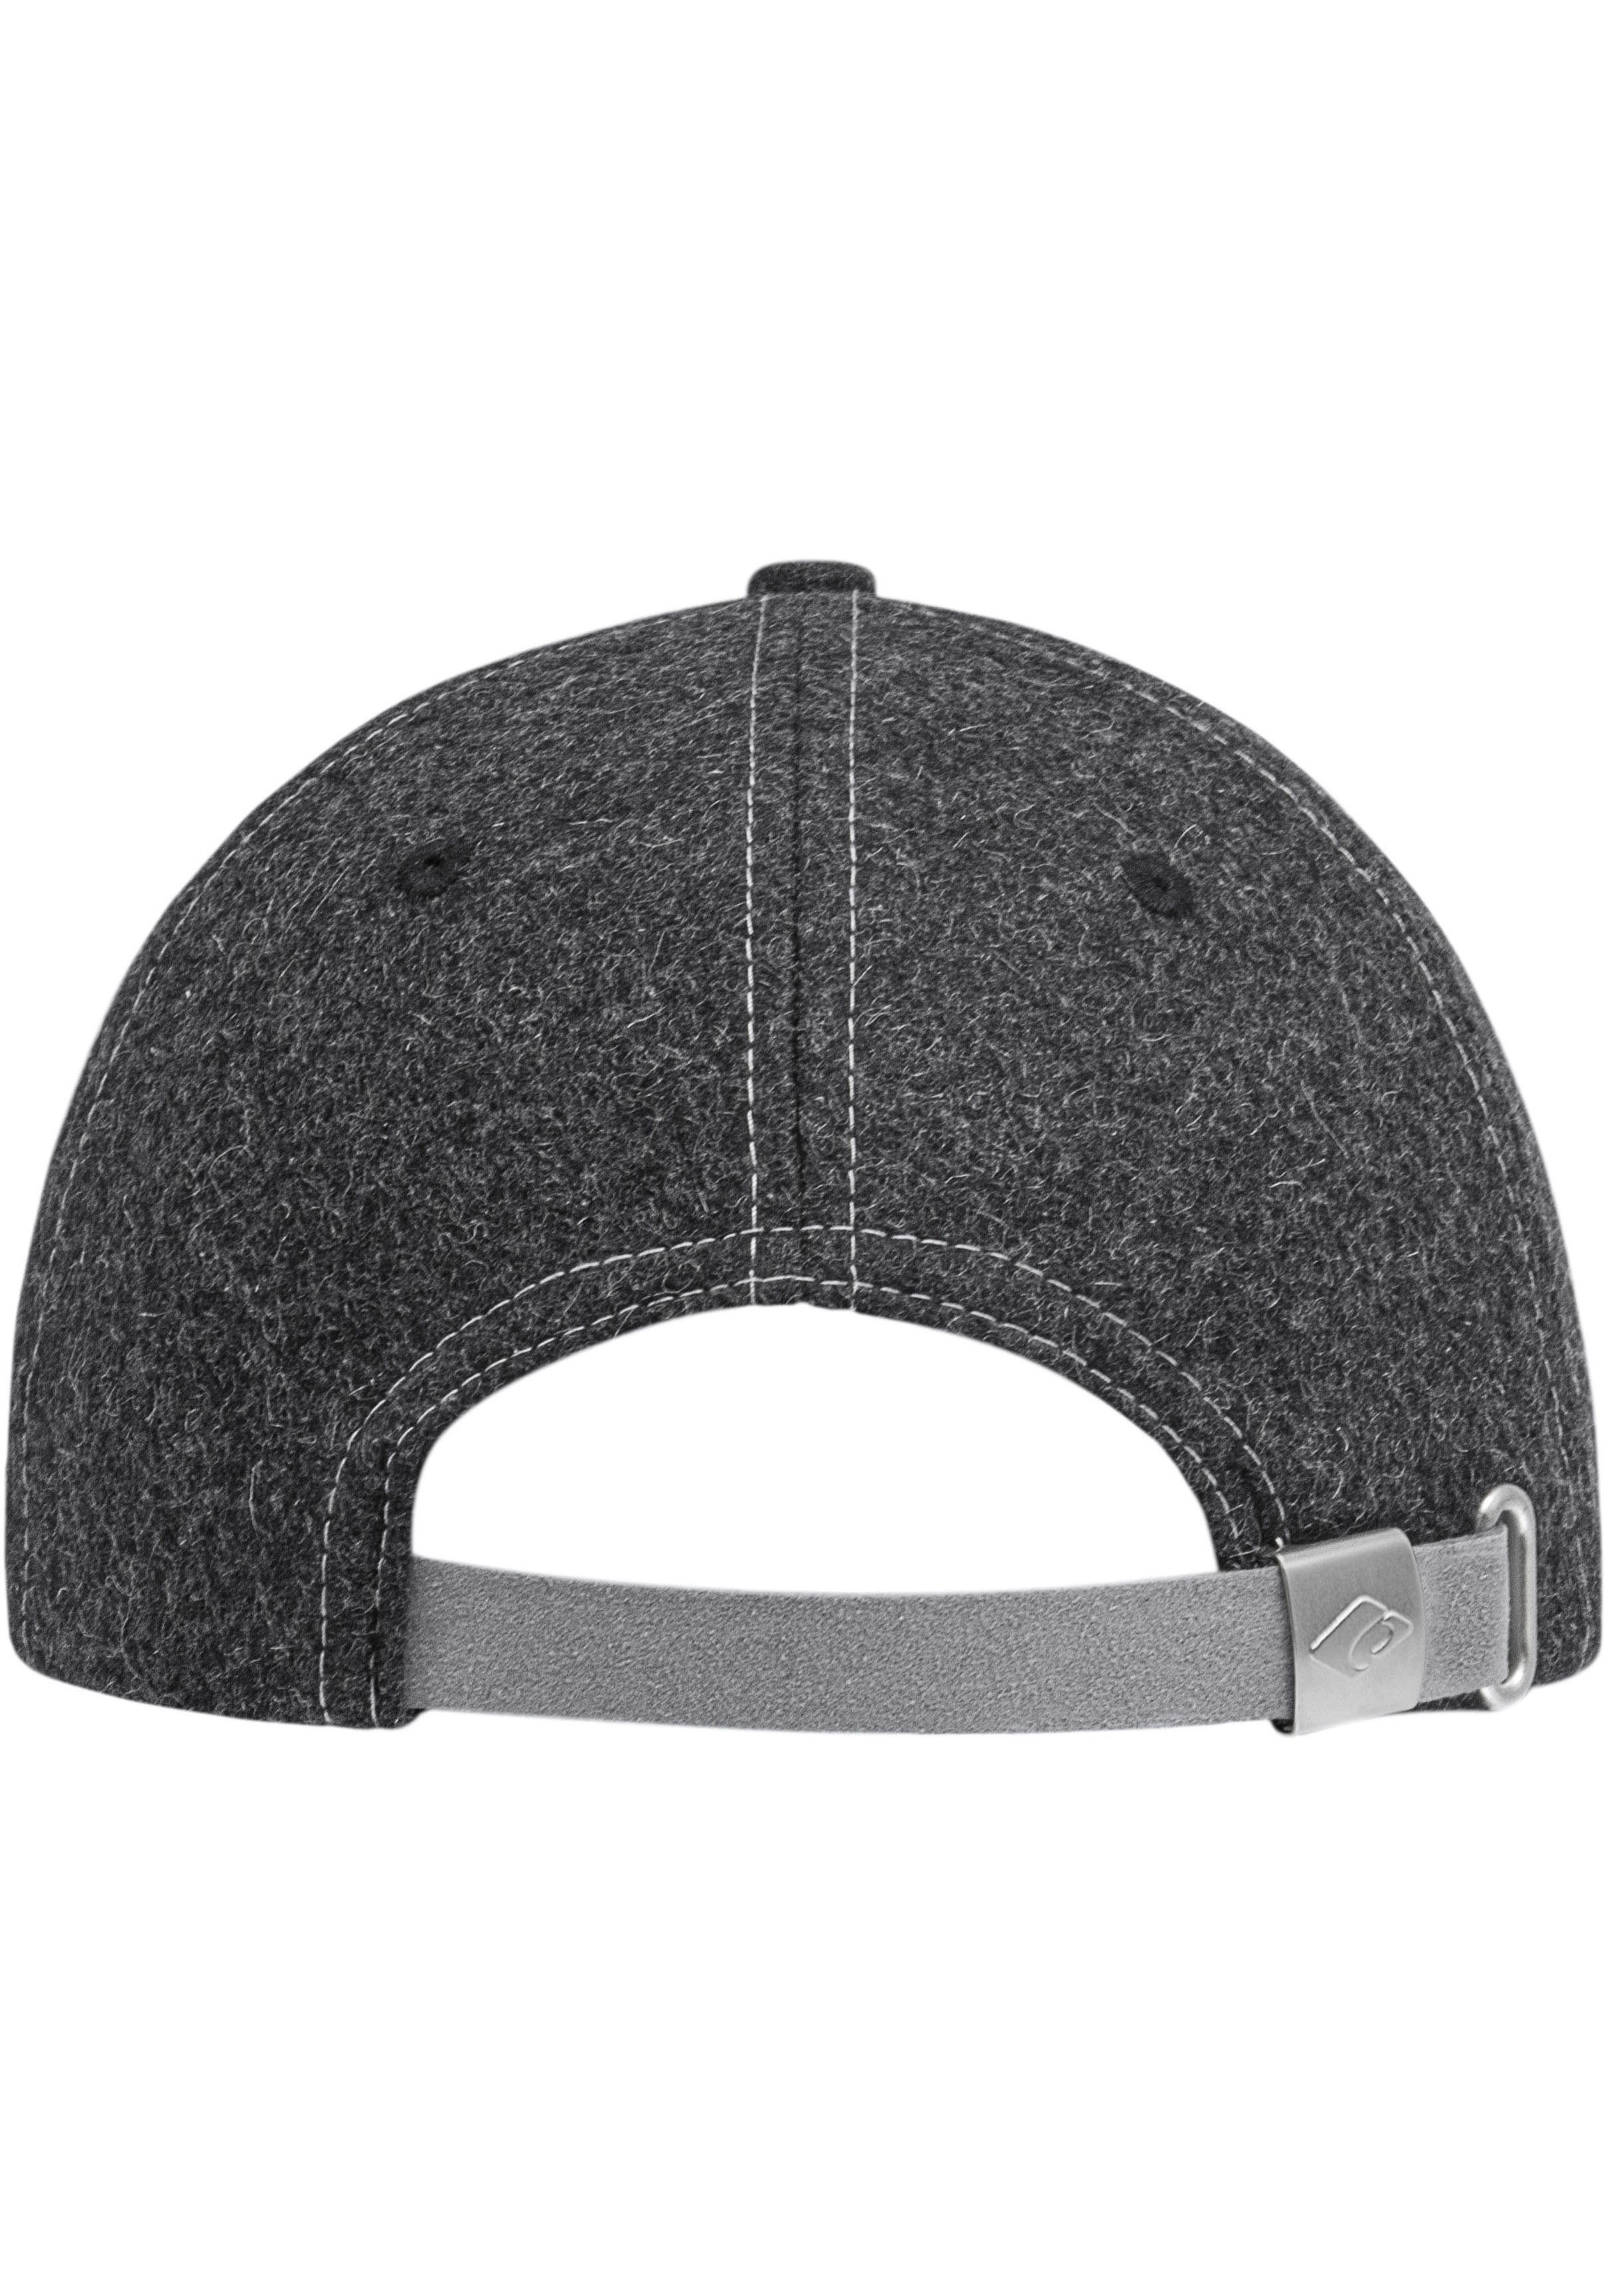 dark Hat Wasserabweisendes Material chillouts Mateo Baseball grey Cap